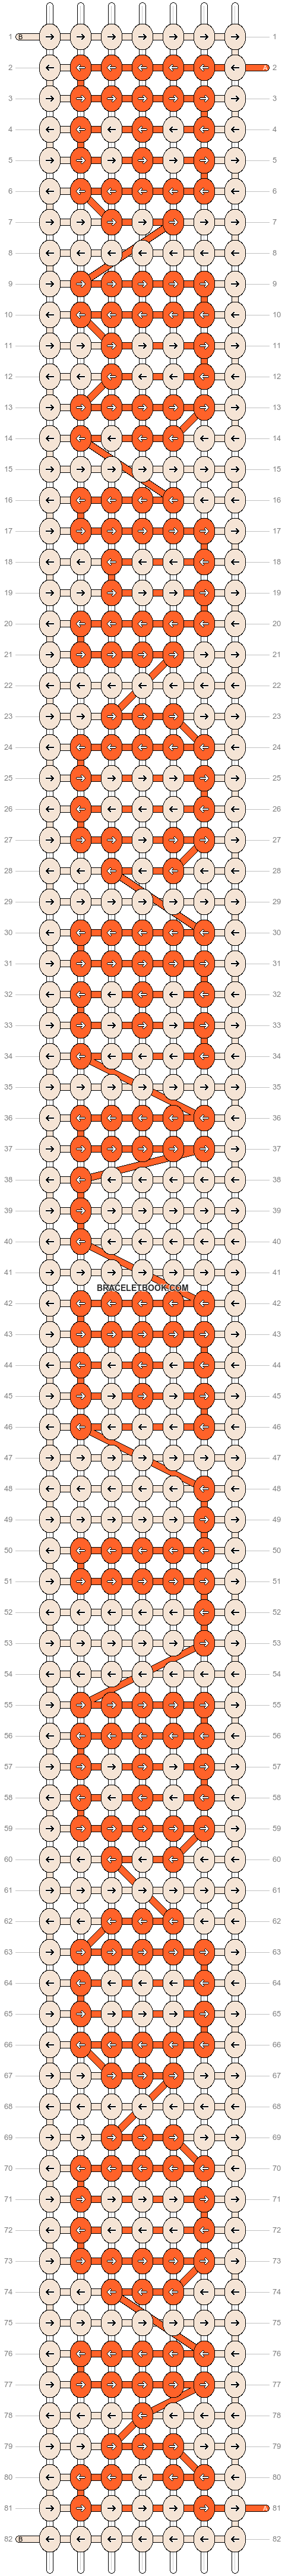 Alpha pattern #25165 variation #49374 pattern